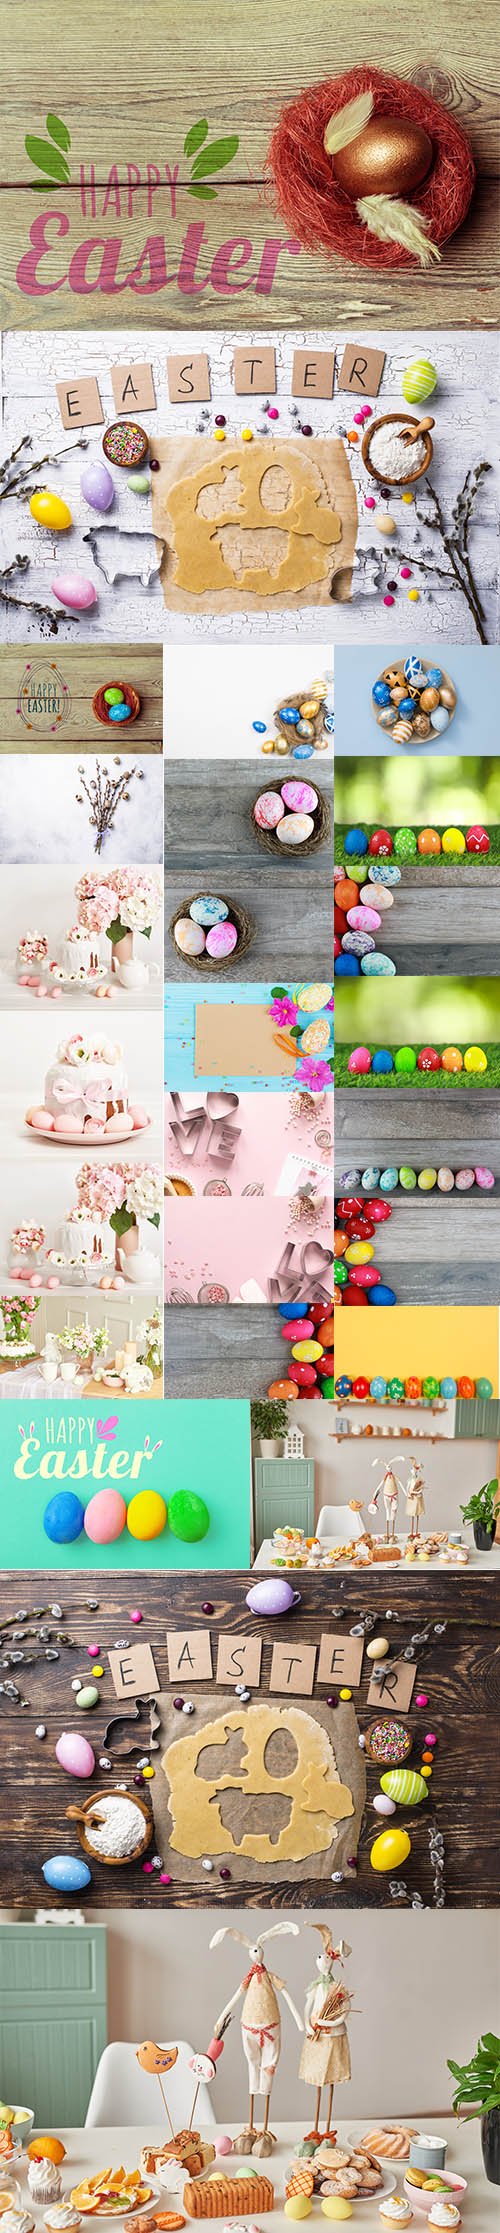 Happy Easter Holiday Decorations Bundle - Premium UHQ JPEG Stock Photo